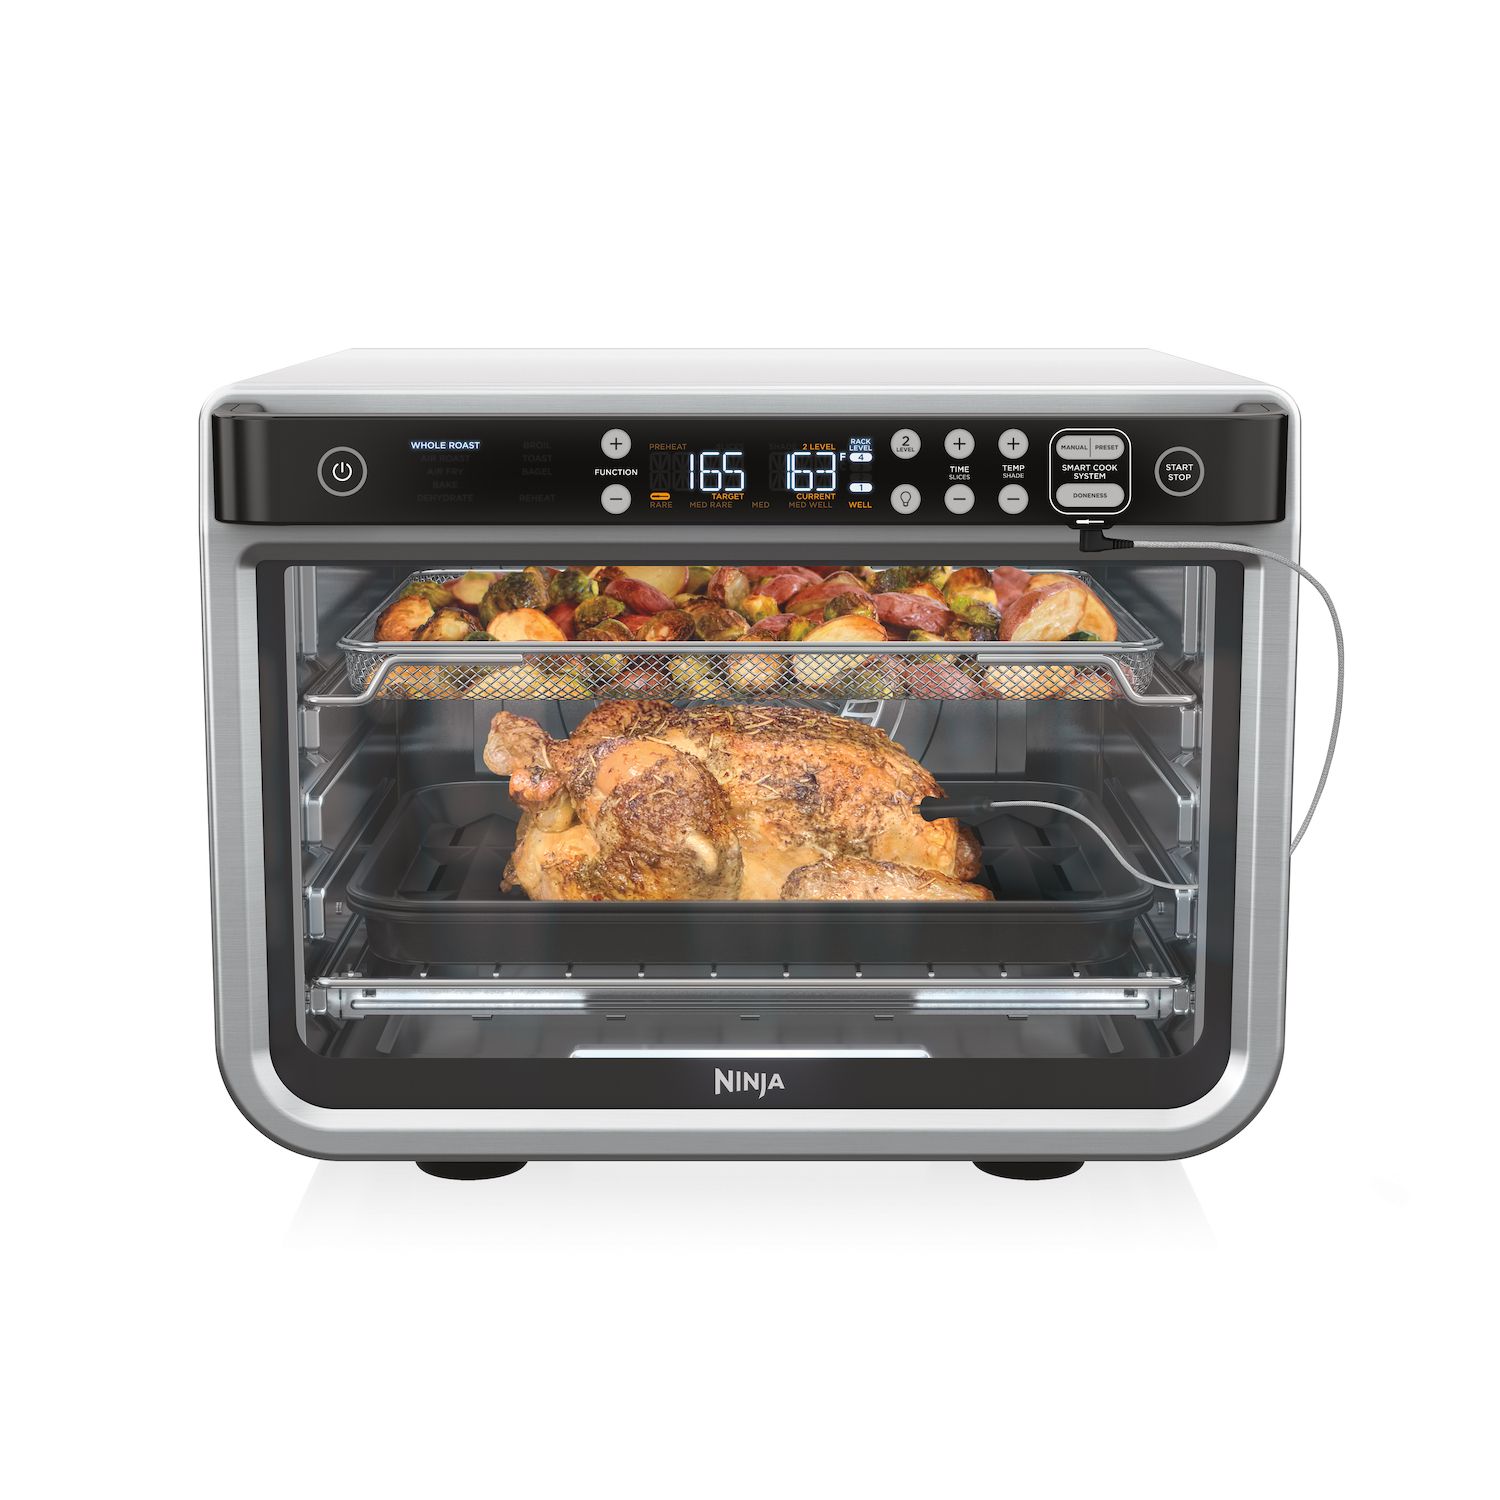 Chefman 18L Toaster Oven Air Fryer, New